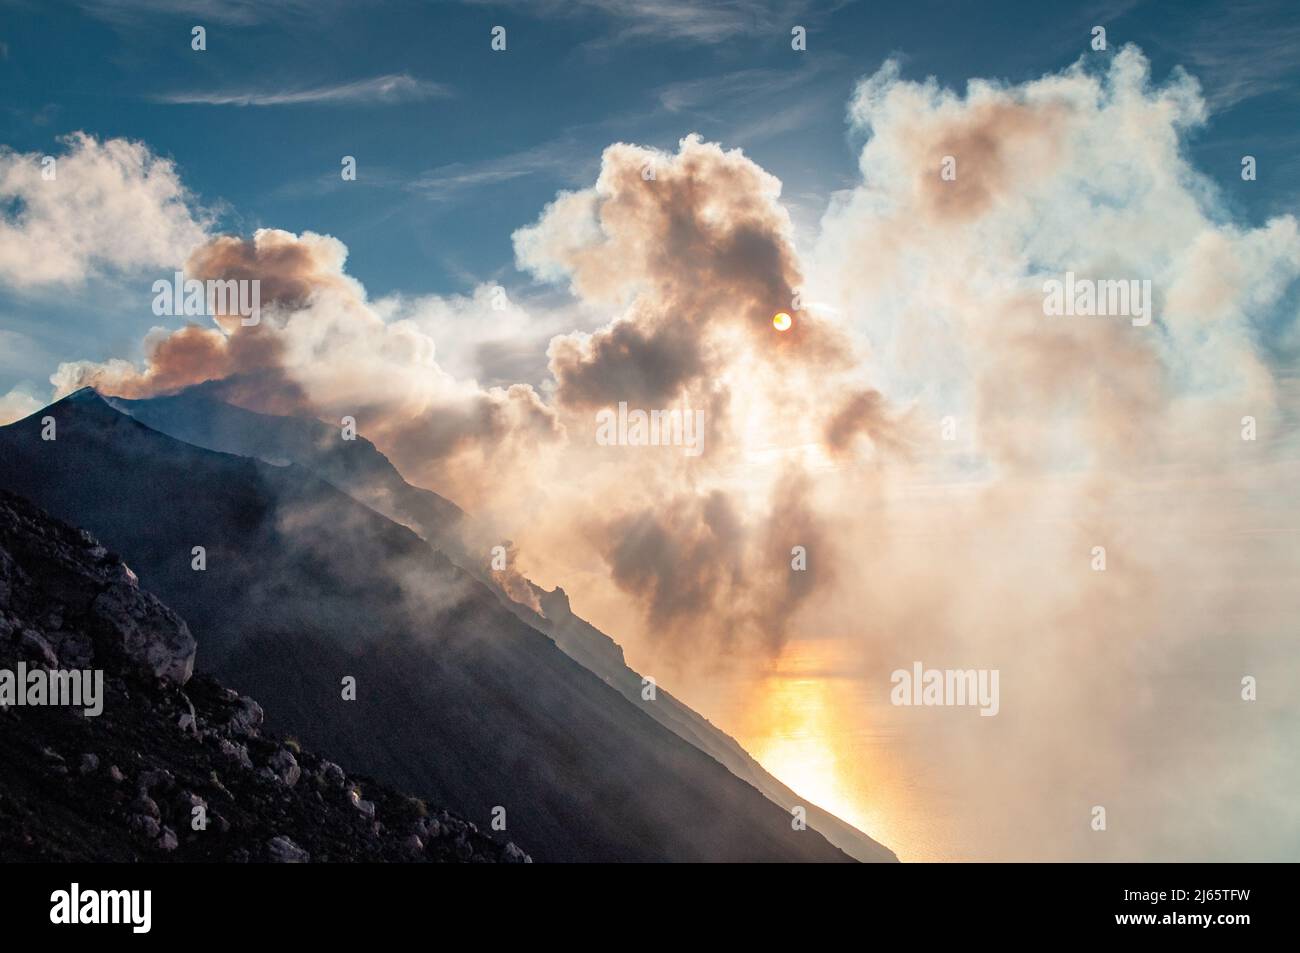 Aktiver Vulkankrater des Stromboli mit heftiger Entgasung - degasing of the volcanic craters of Stromboli Stock Photo